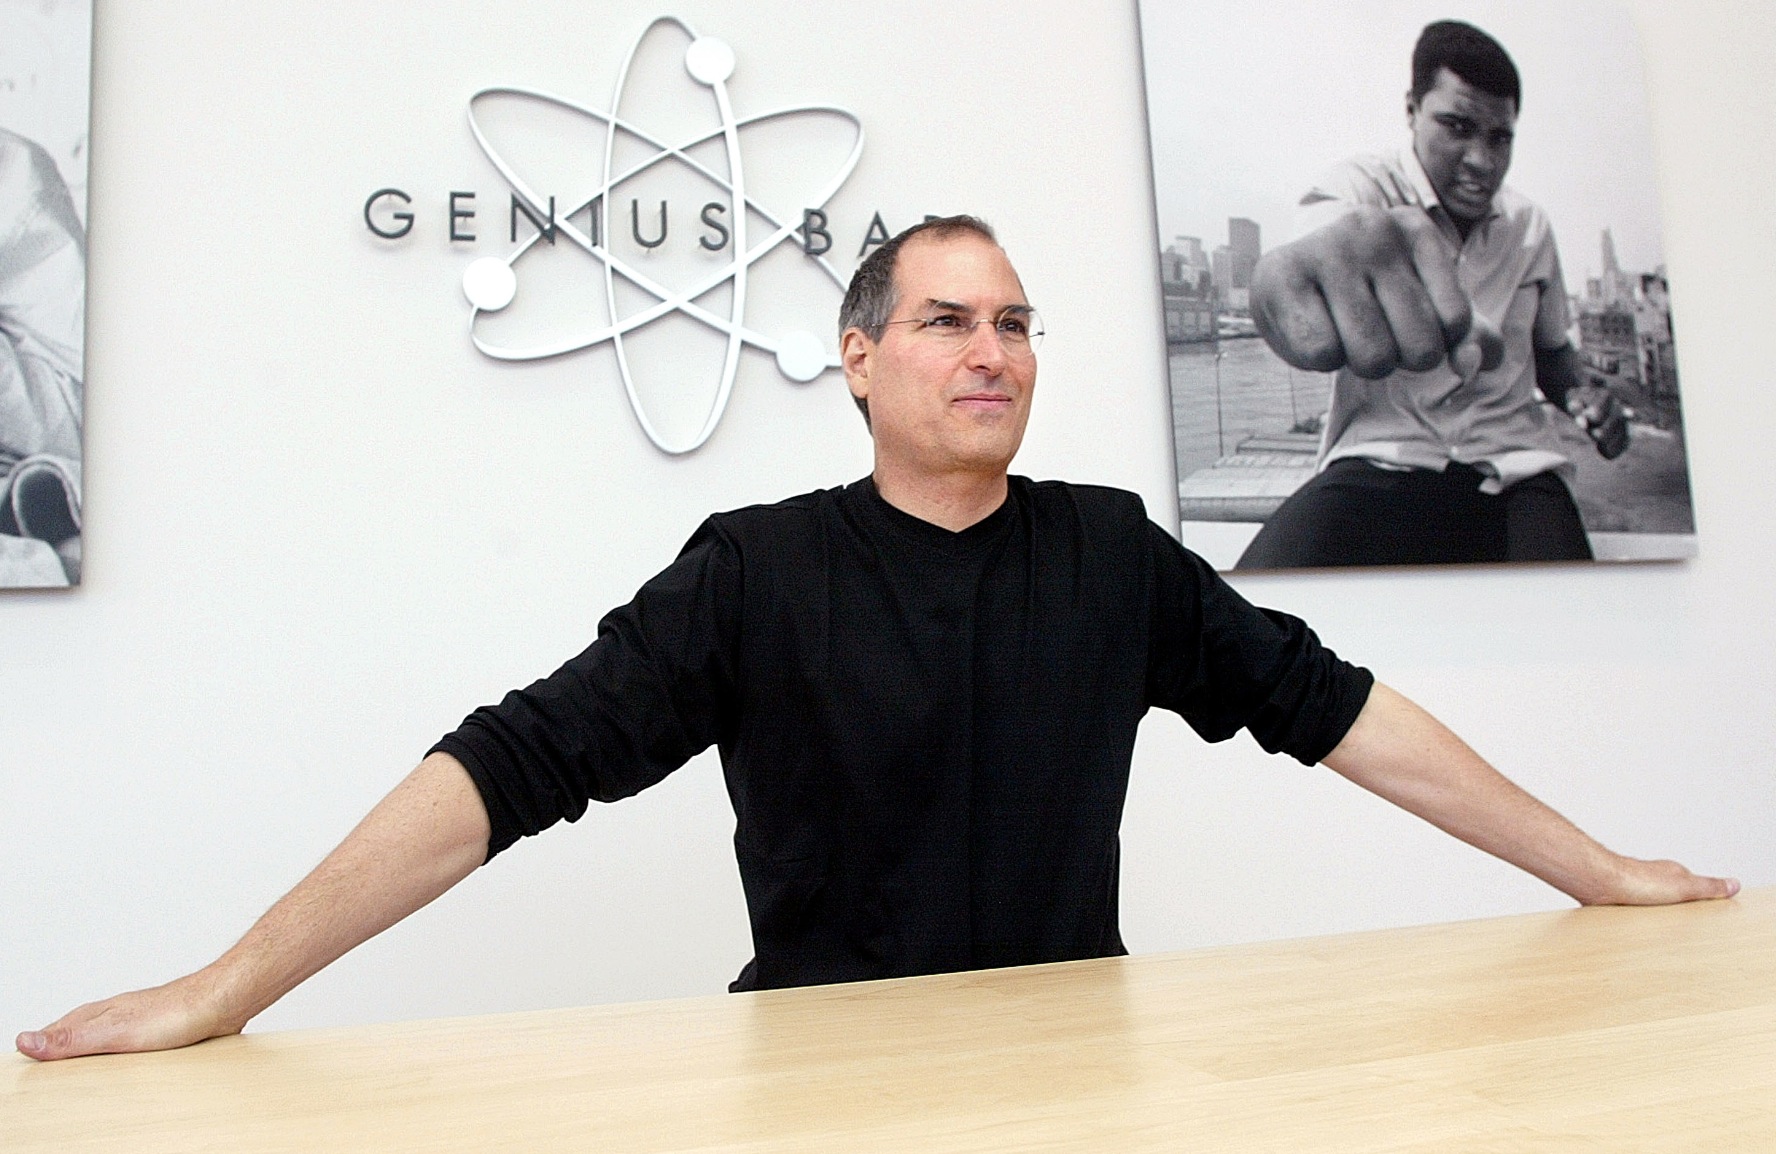 Steve Jobs: Genius Bar fikri aptalca, işe yaramaz!